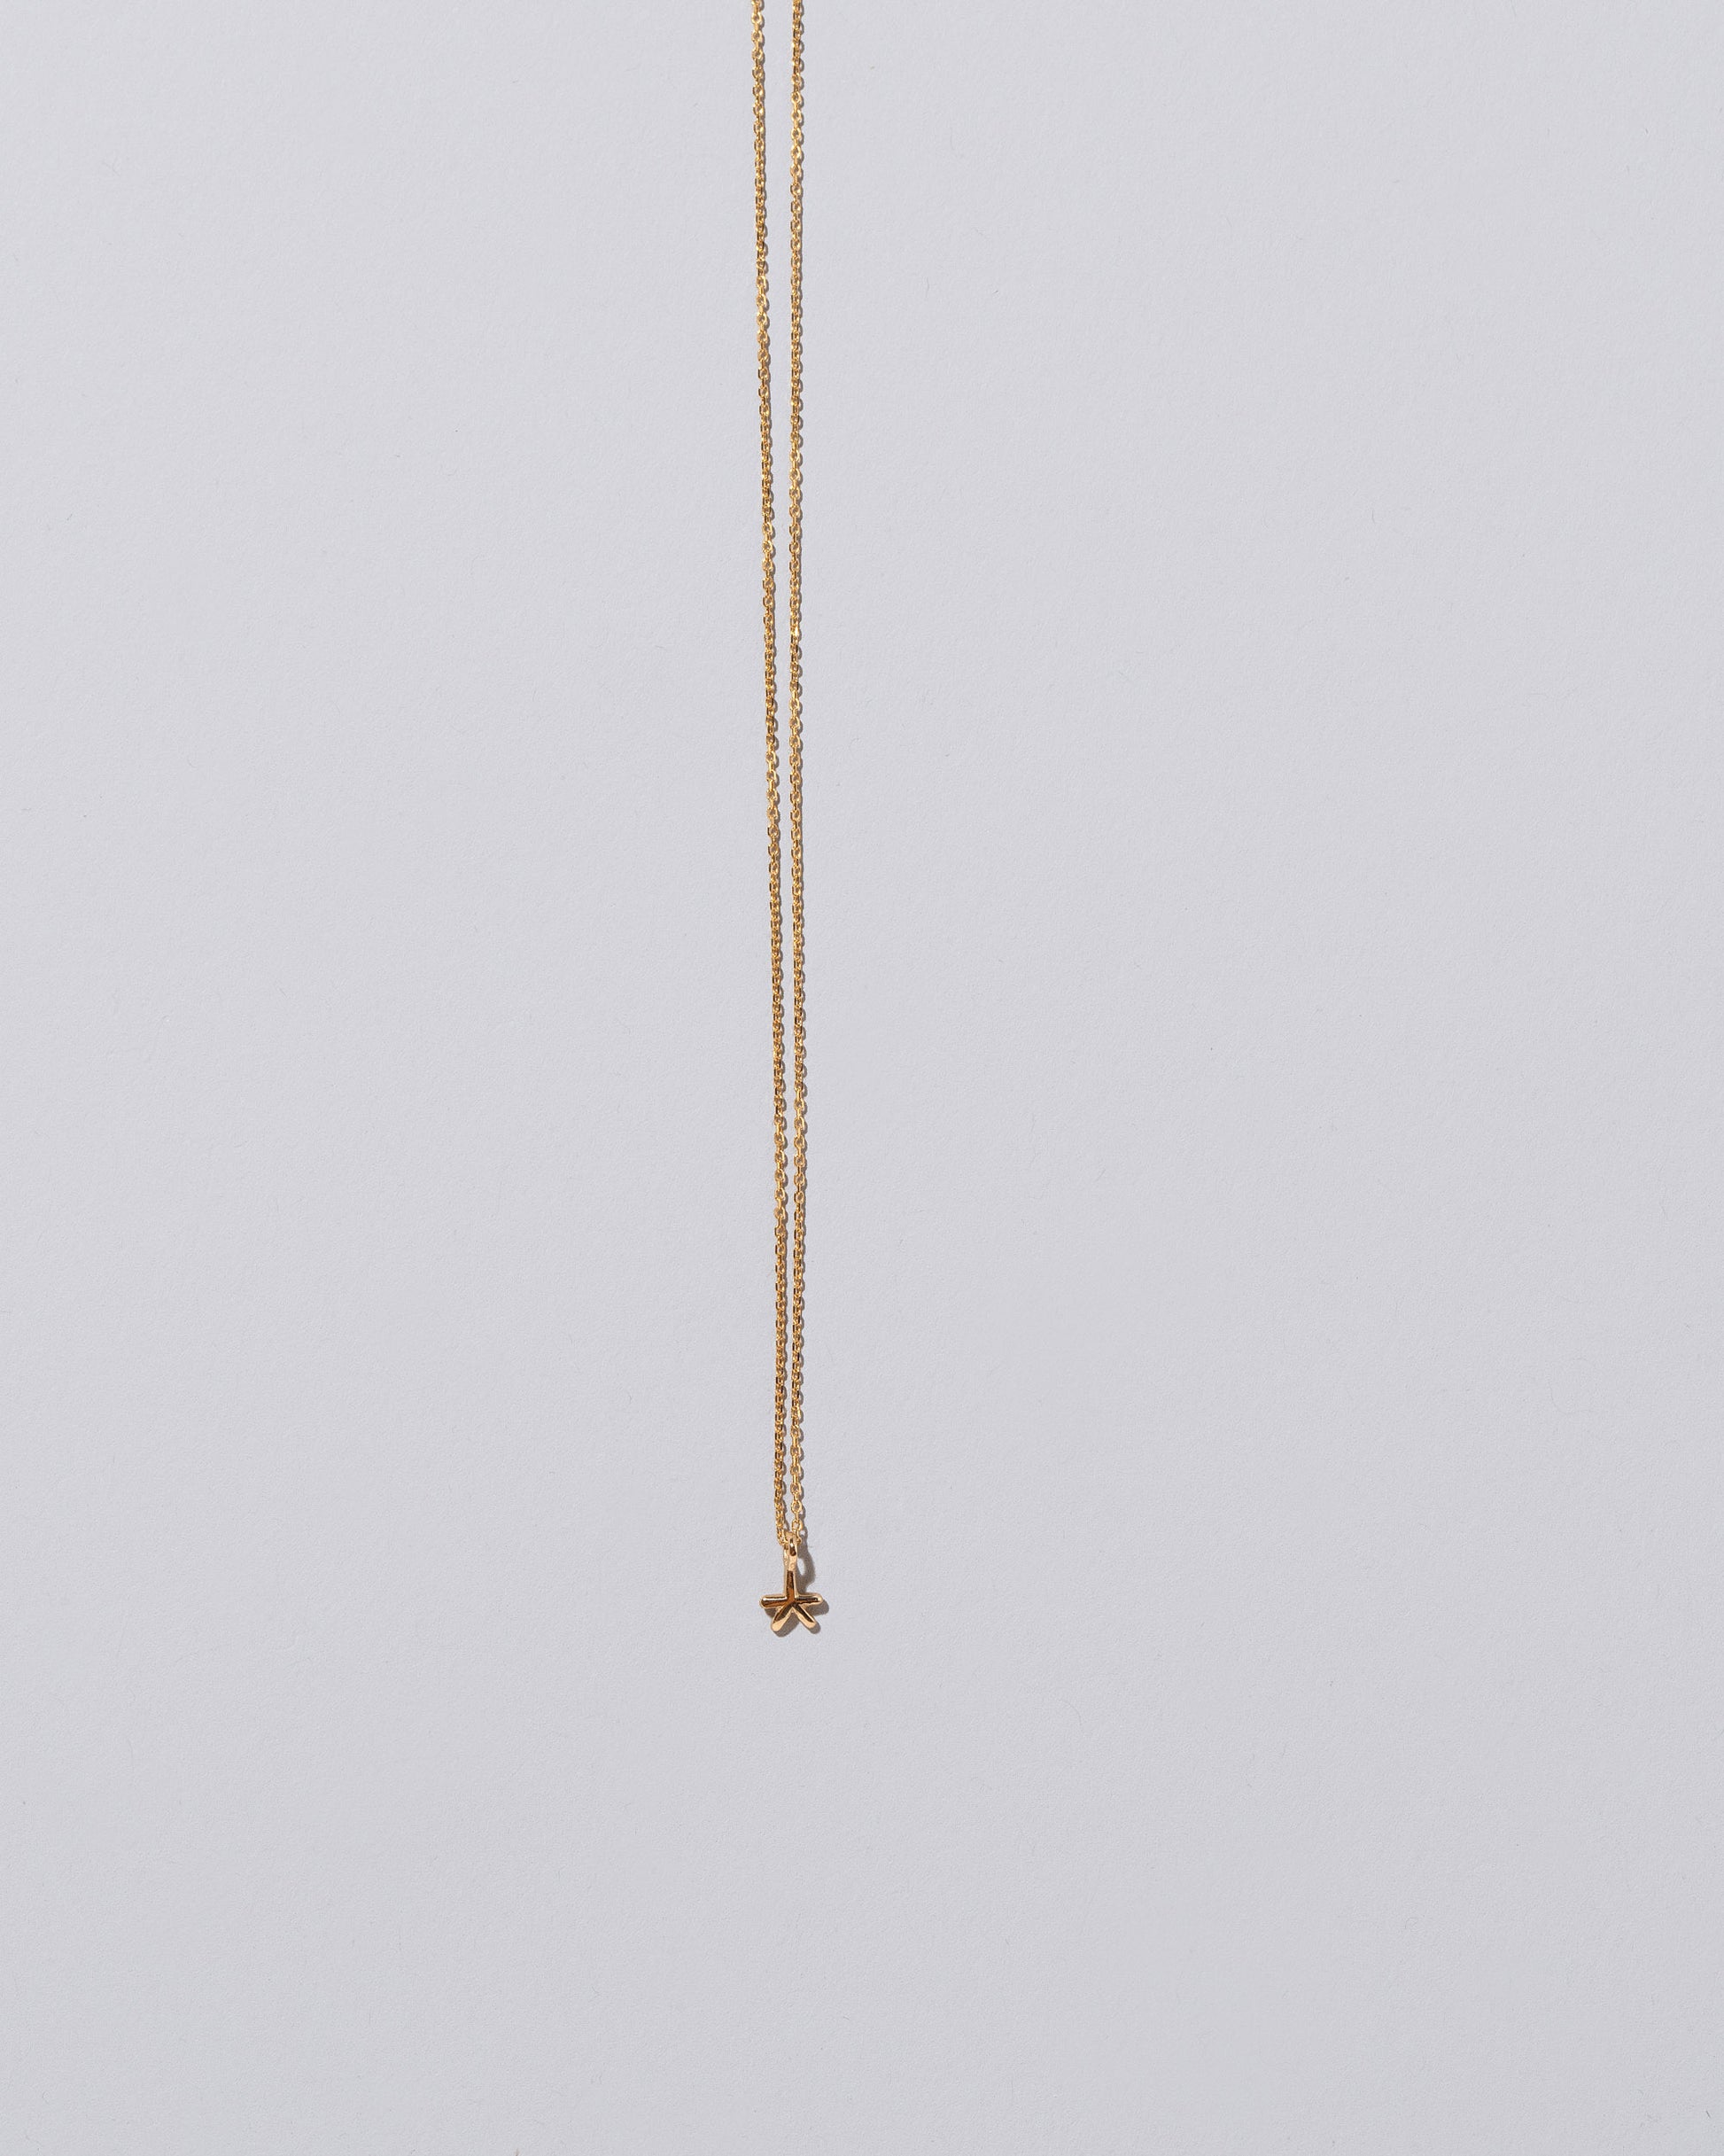 Star Talisman Pendant Necklace on light color background.